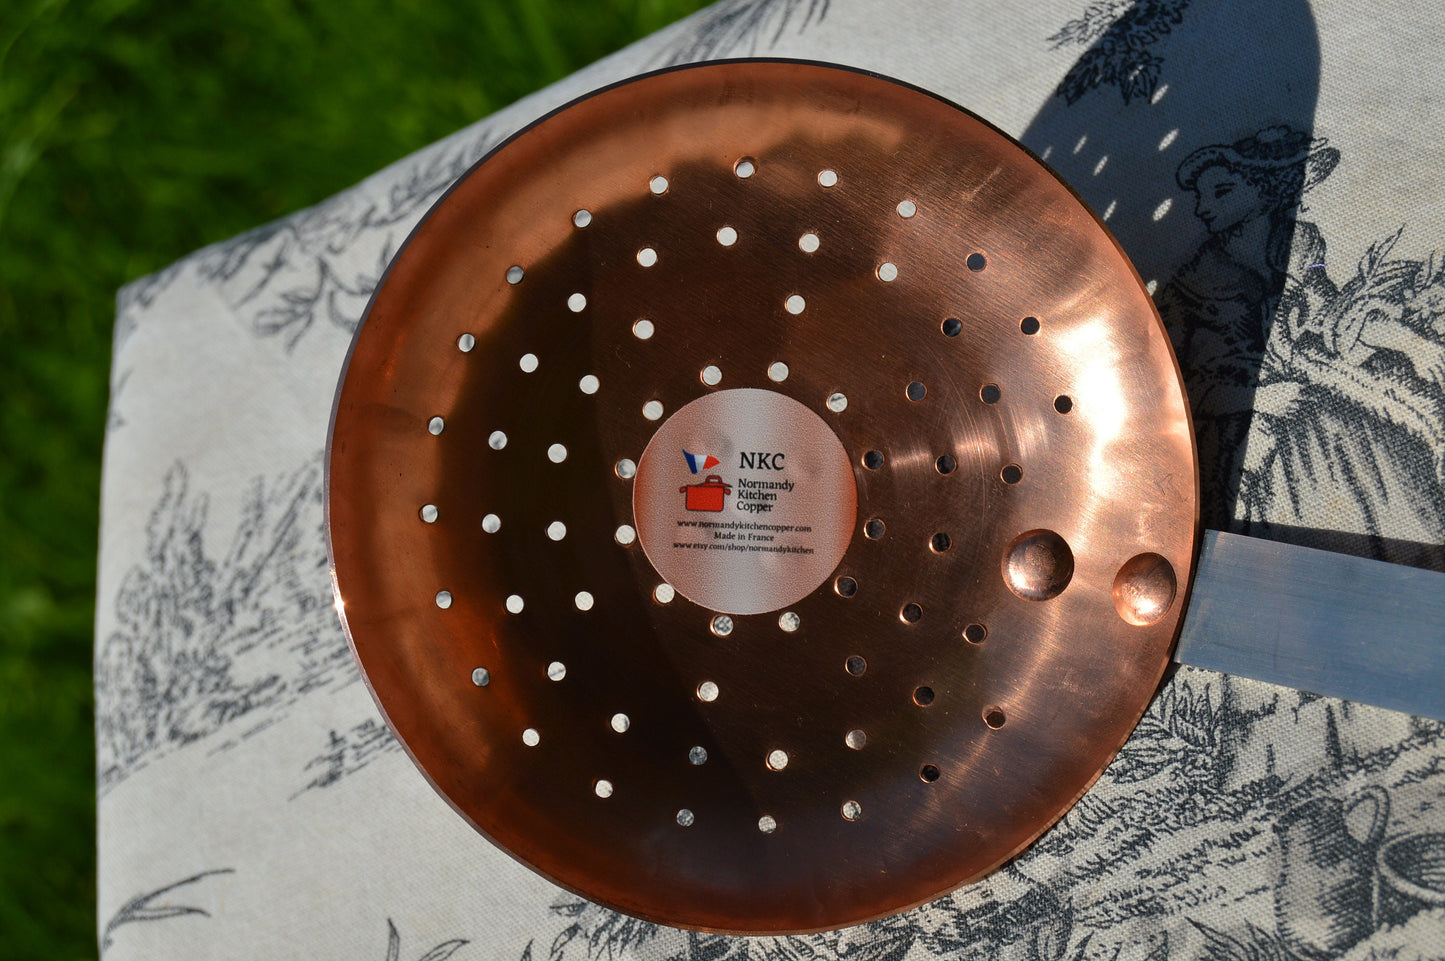 New NKC 28 cm Copper Jam Pan + Ecumoire Skimmer Normandy Kitchen Copper Jam Jelly Pan 11" Rolled Top Stainless Steel Handles New NKC 28cm